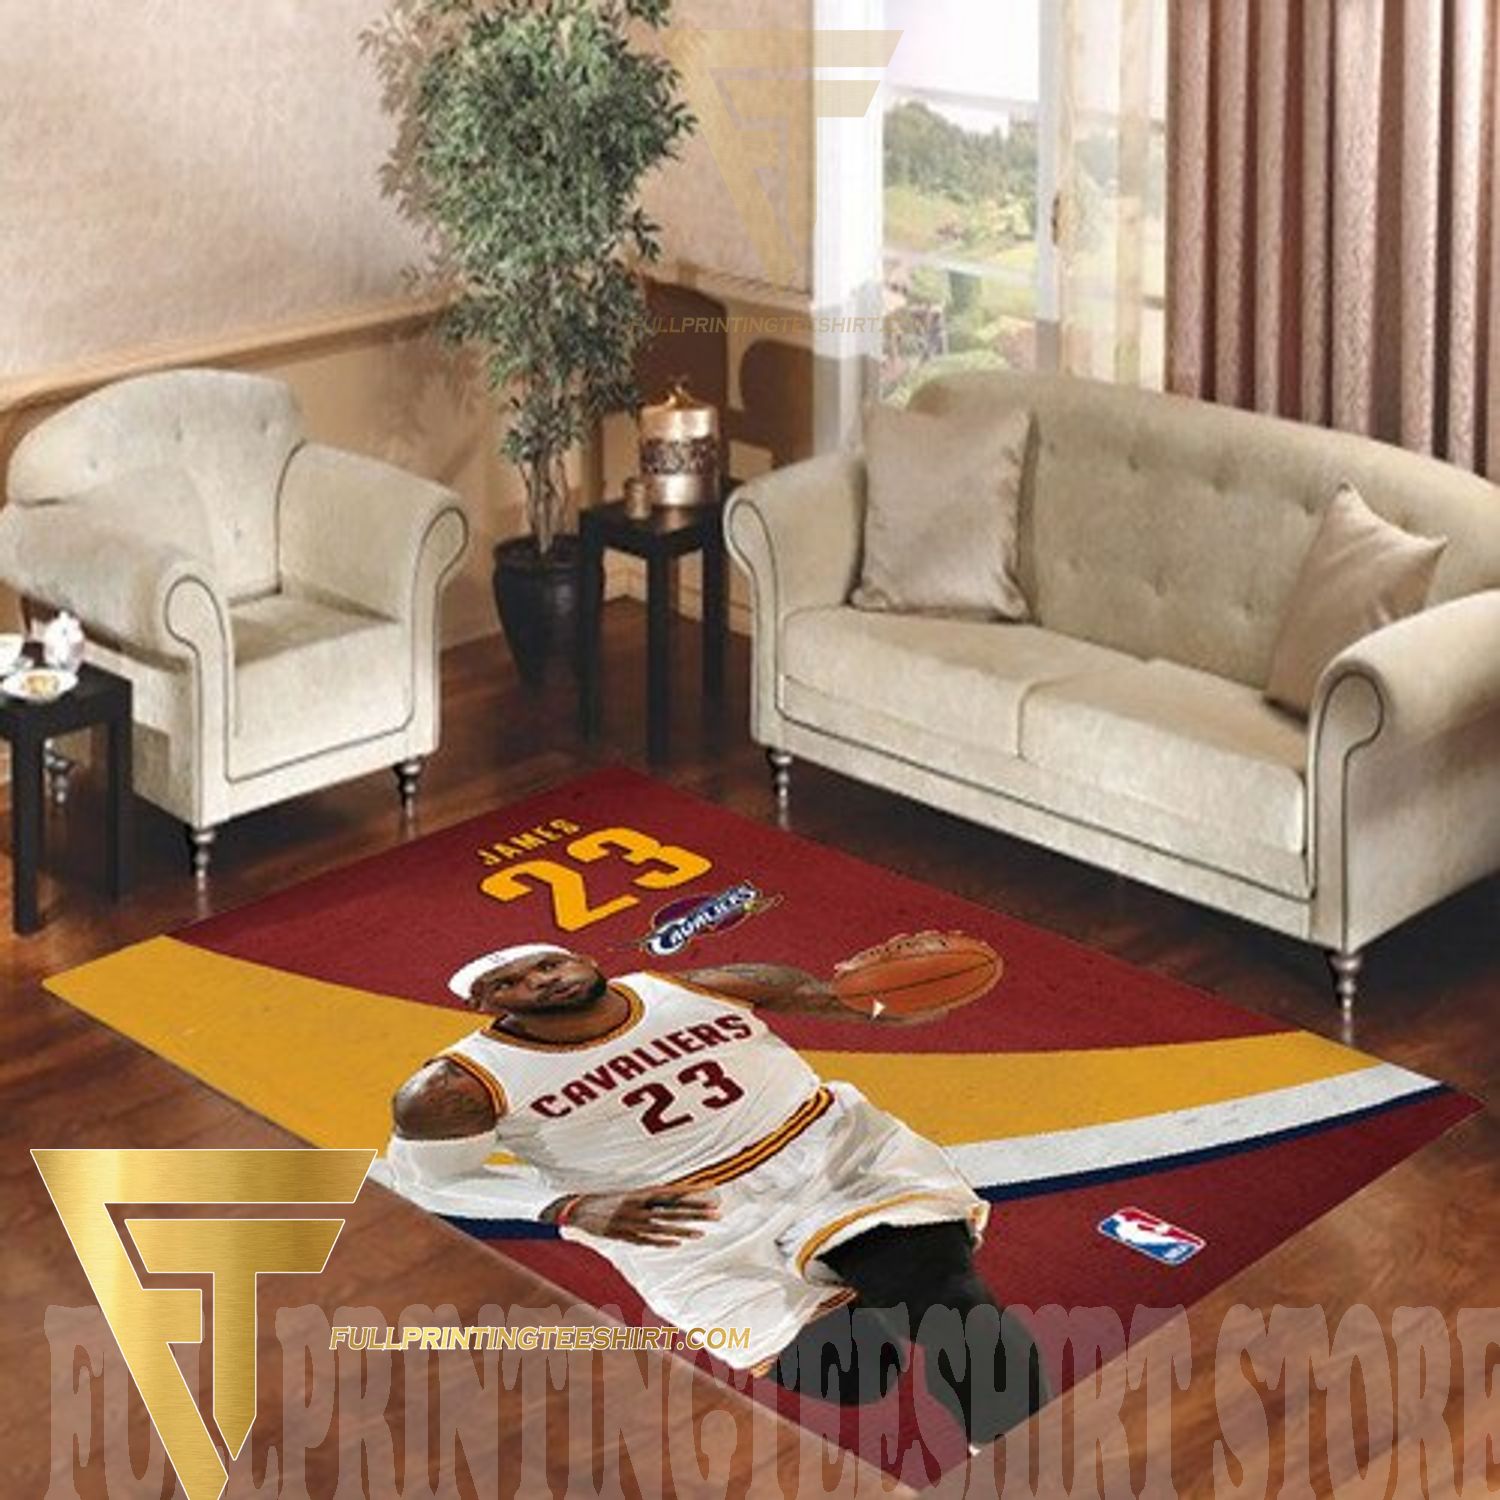 https://images.fullprintingteeshirt.com/2022/11/lebron-james-fastbreak-home-decor-living-room-carpet-rugs-1-mGUGL.jpg